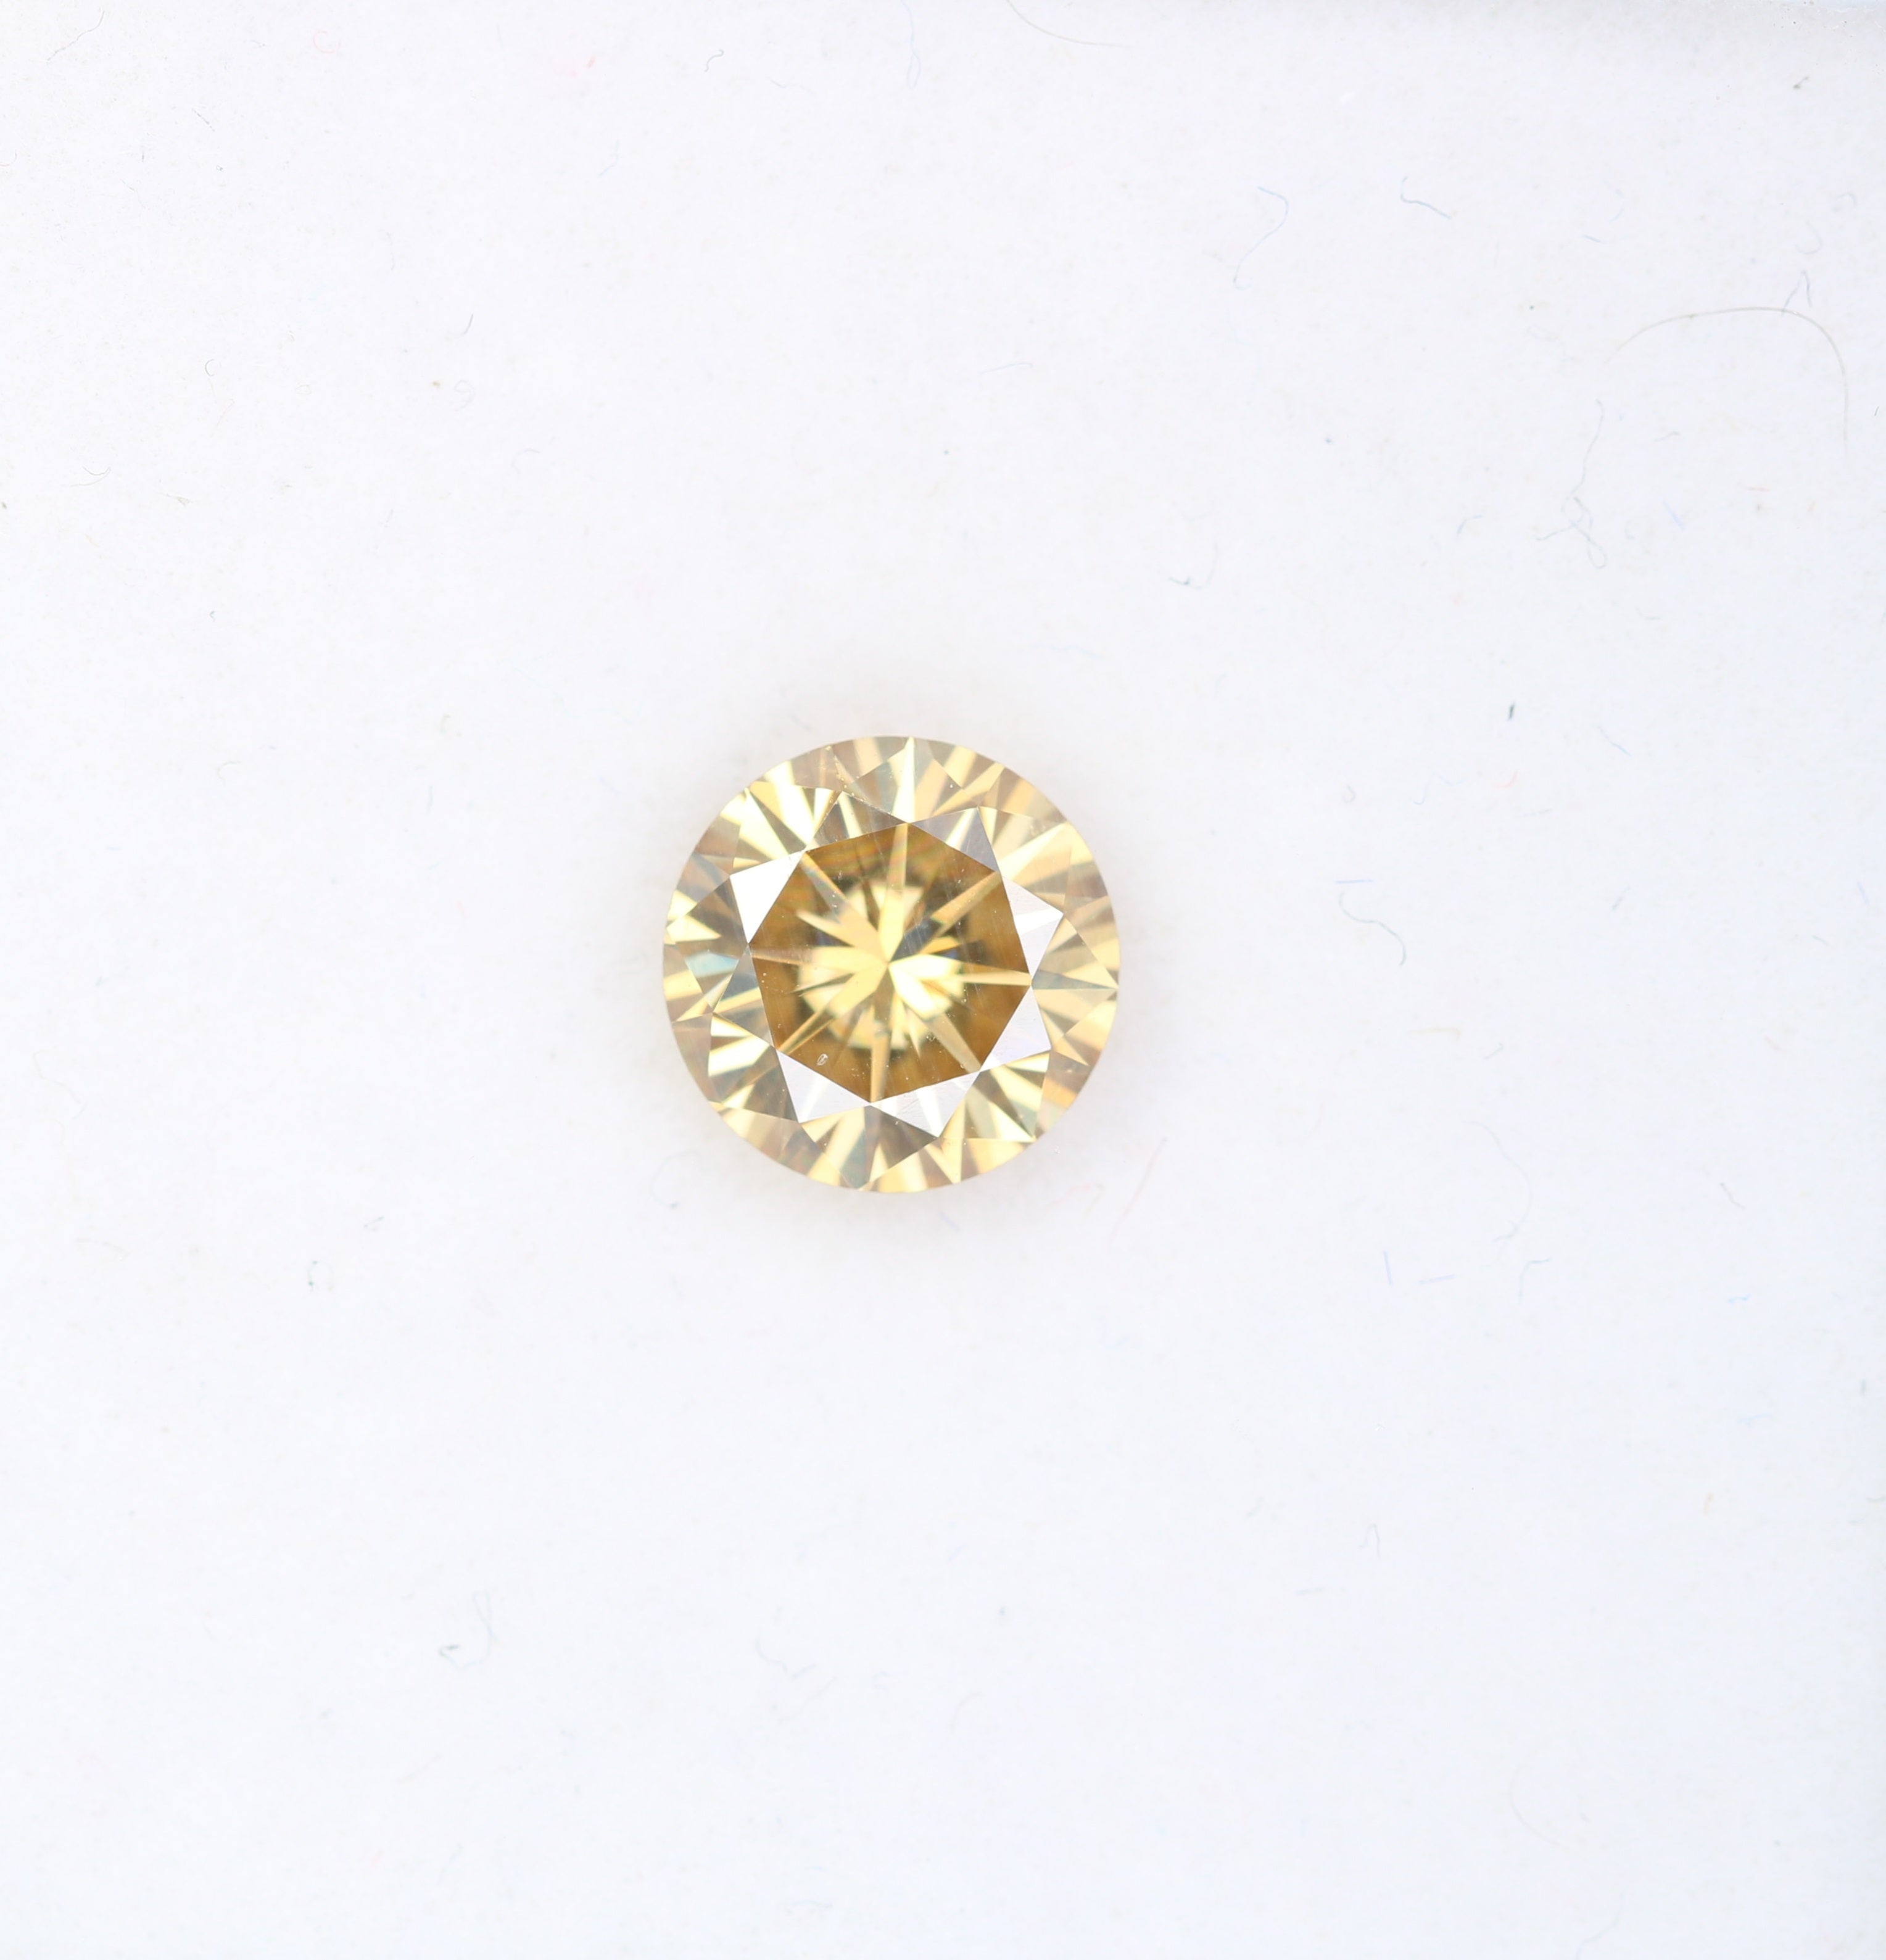 1.15 CT Round Brilliant Cut Moissanite Orange Diamond For Engagement Ring